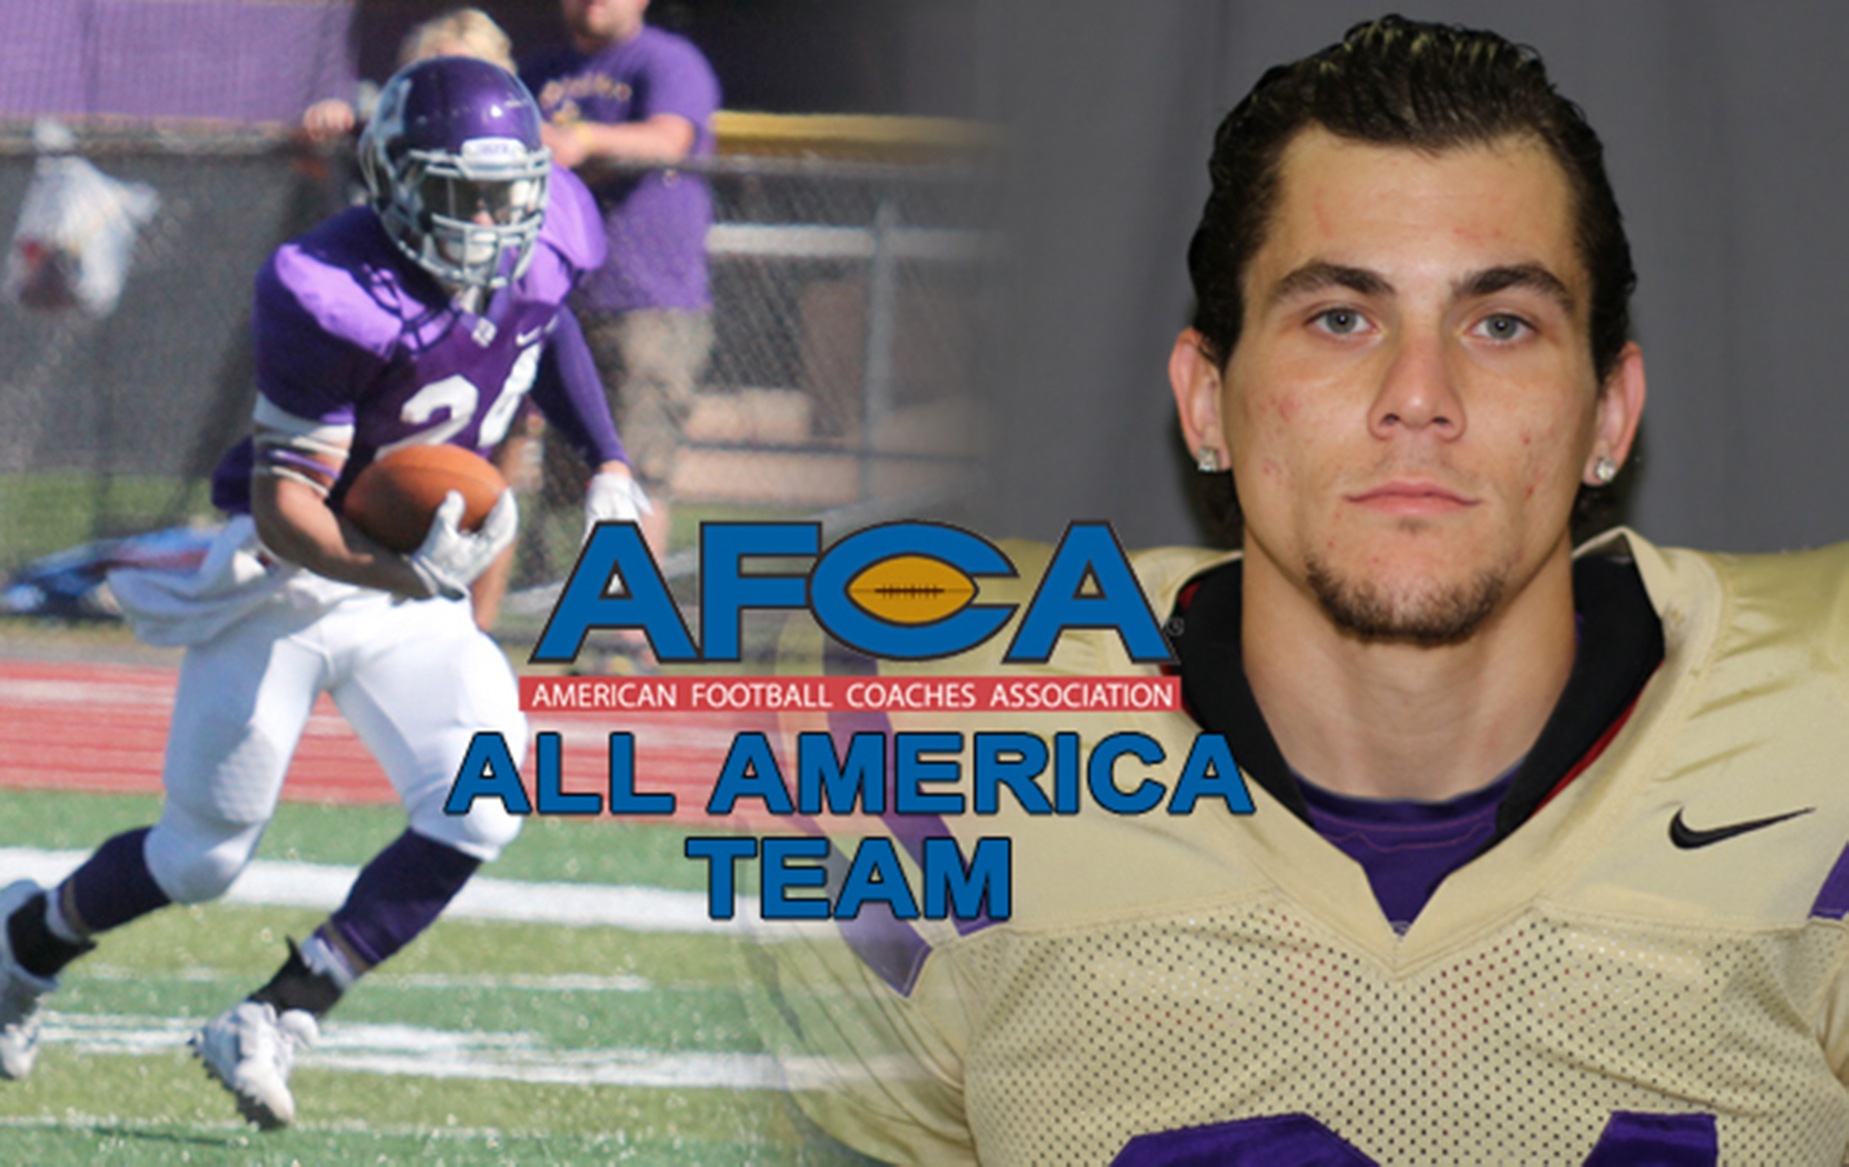 Tony Sierra Named to the 2013 AFCA All America Team